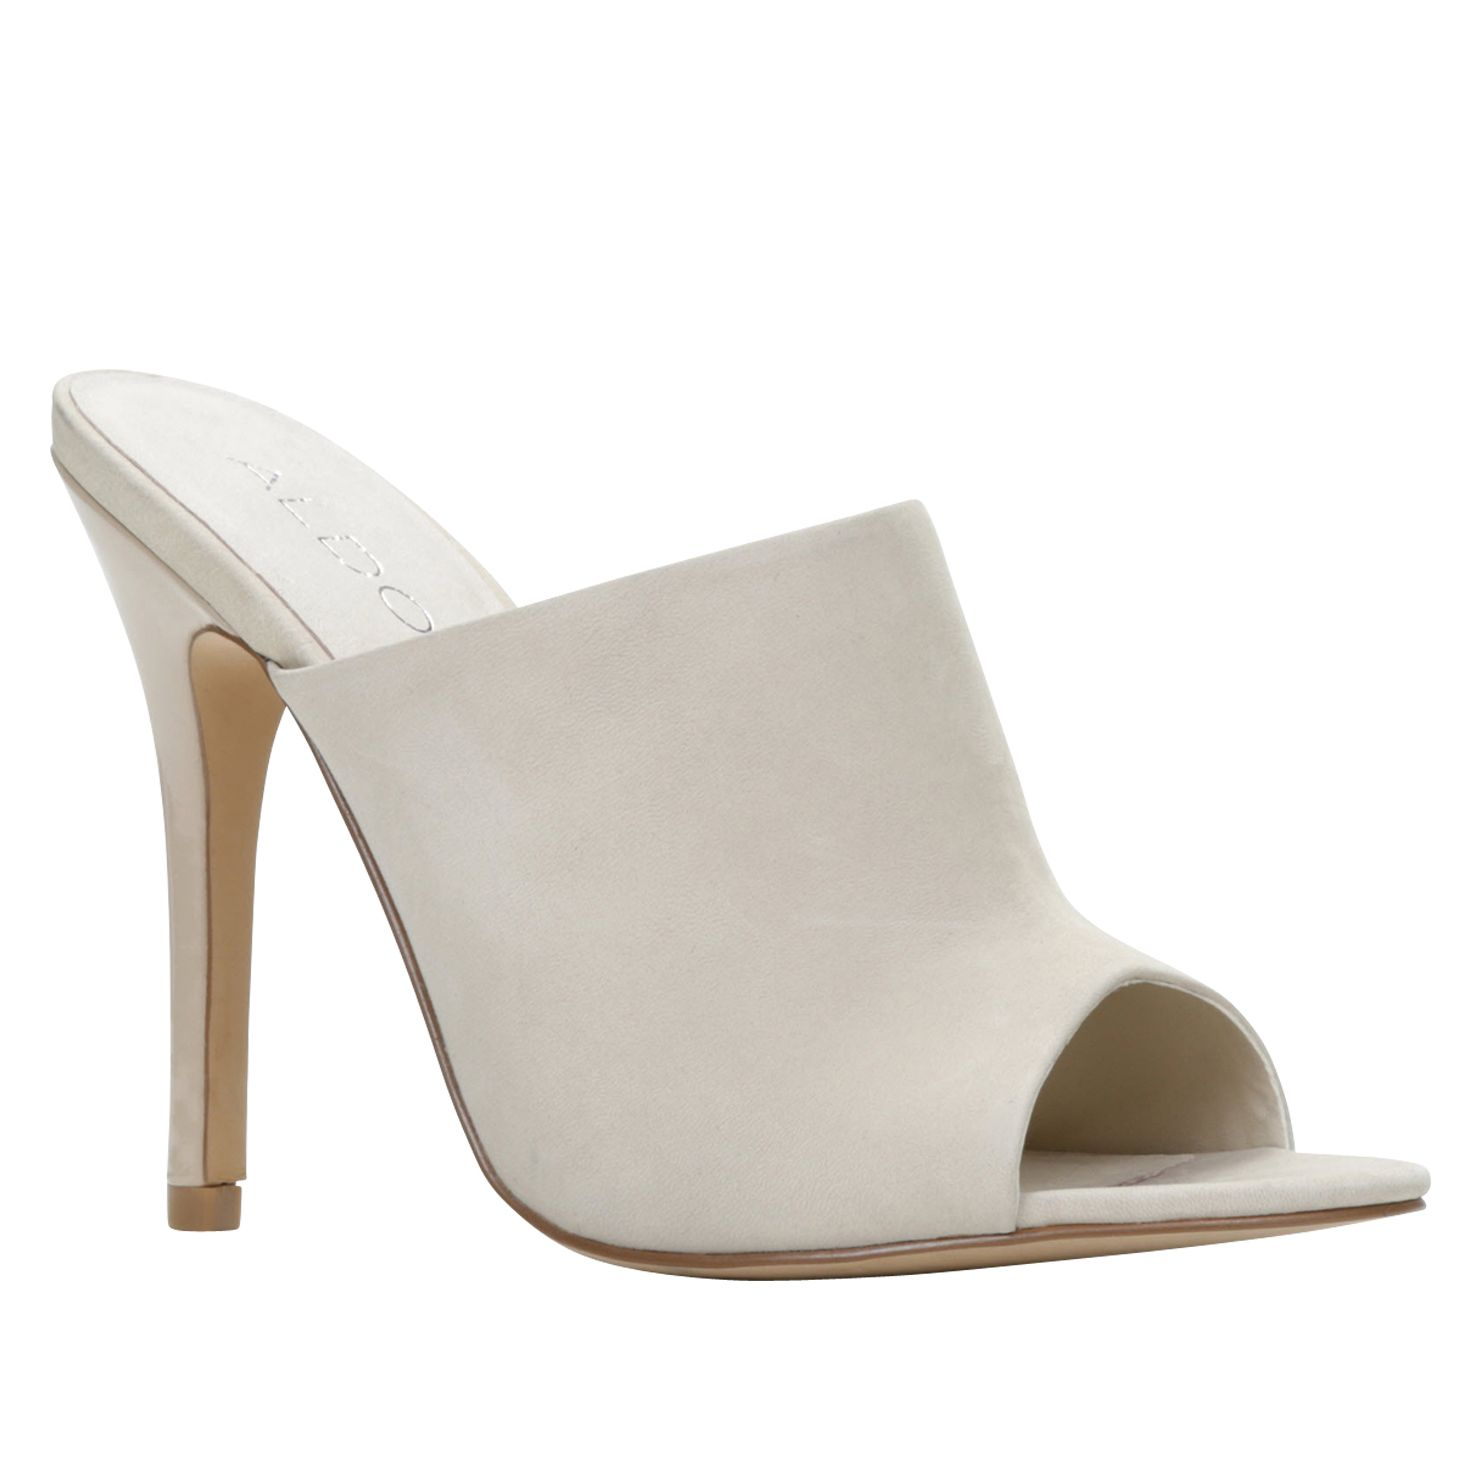 Aldo Hamaliel Peep Toe High Heel Sandals in White (Off White) | Lyst